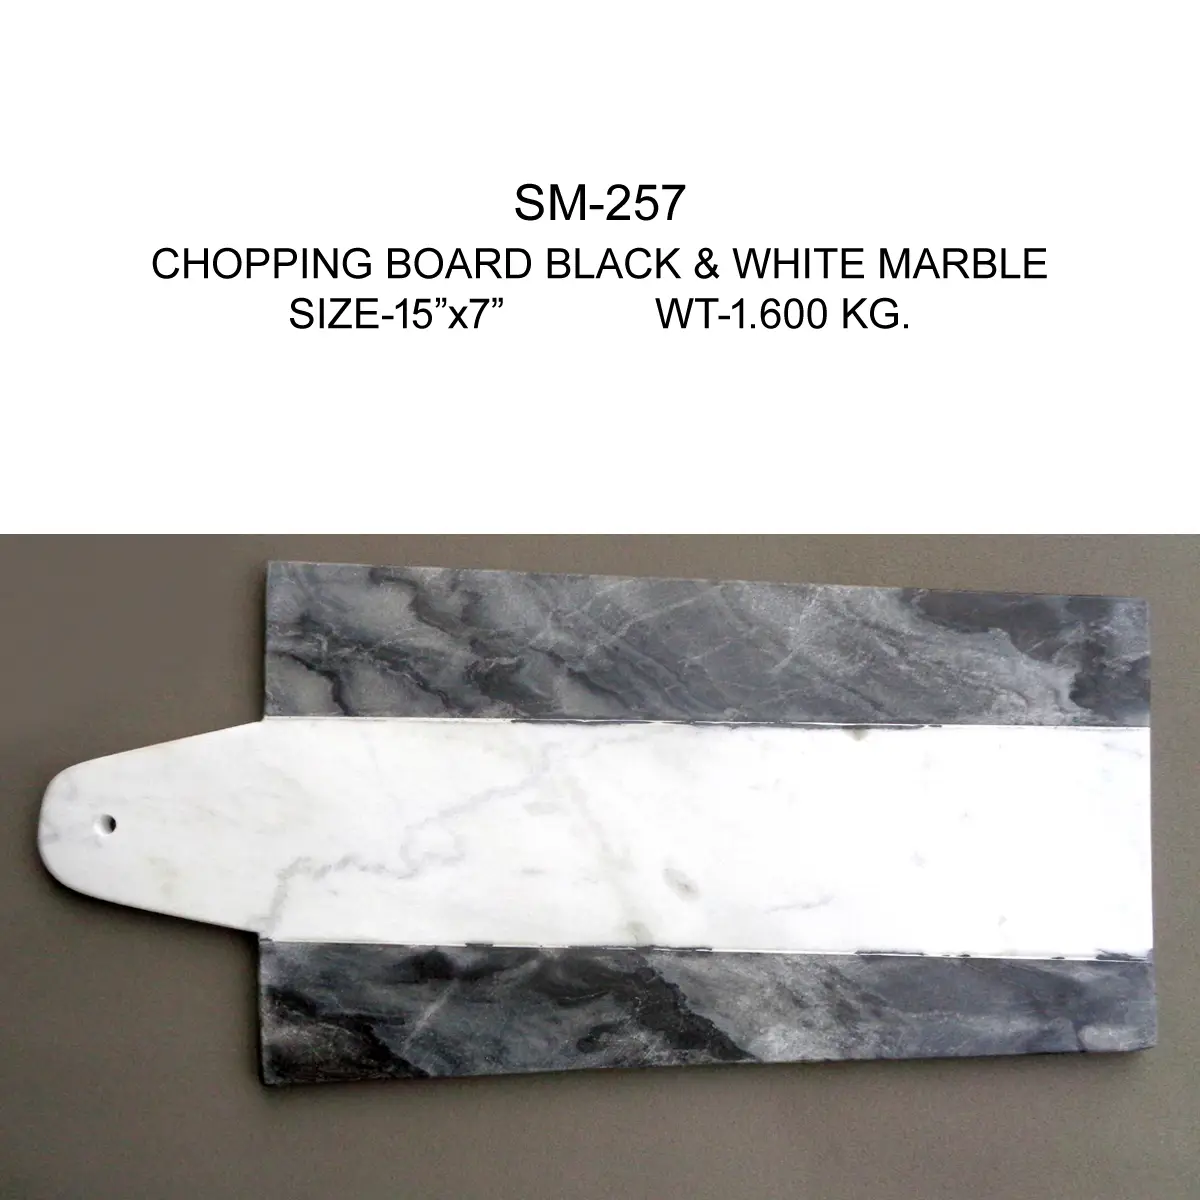 CHOPPIN BOARD BLACK & WHITE MARBLE